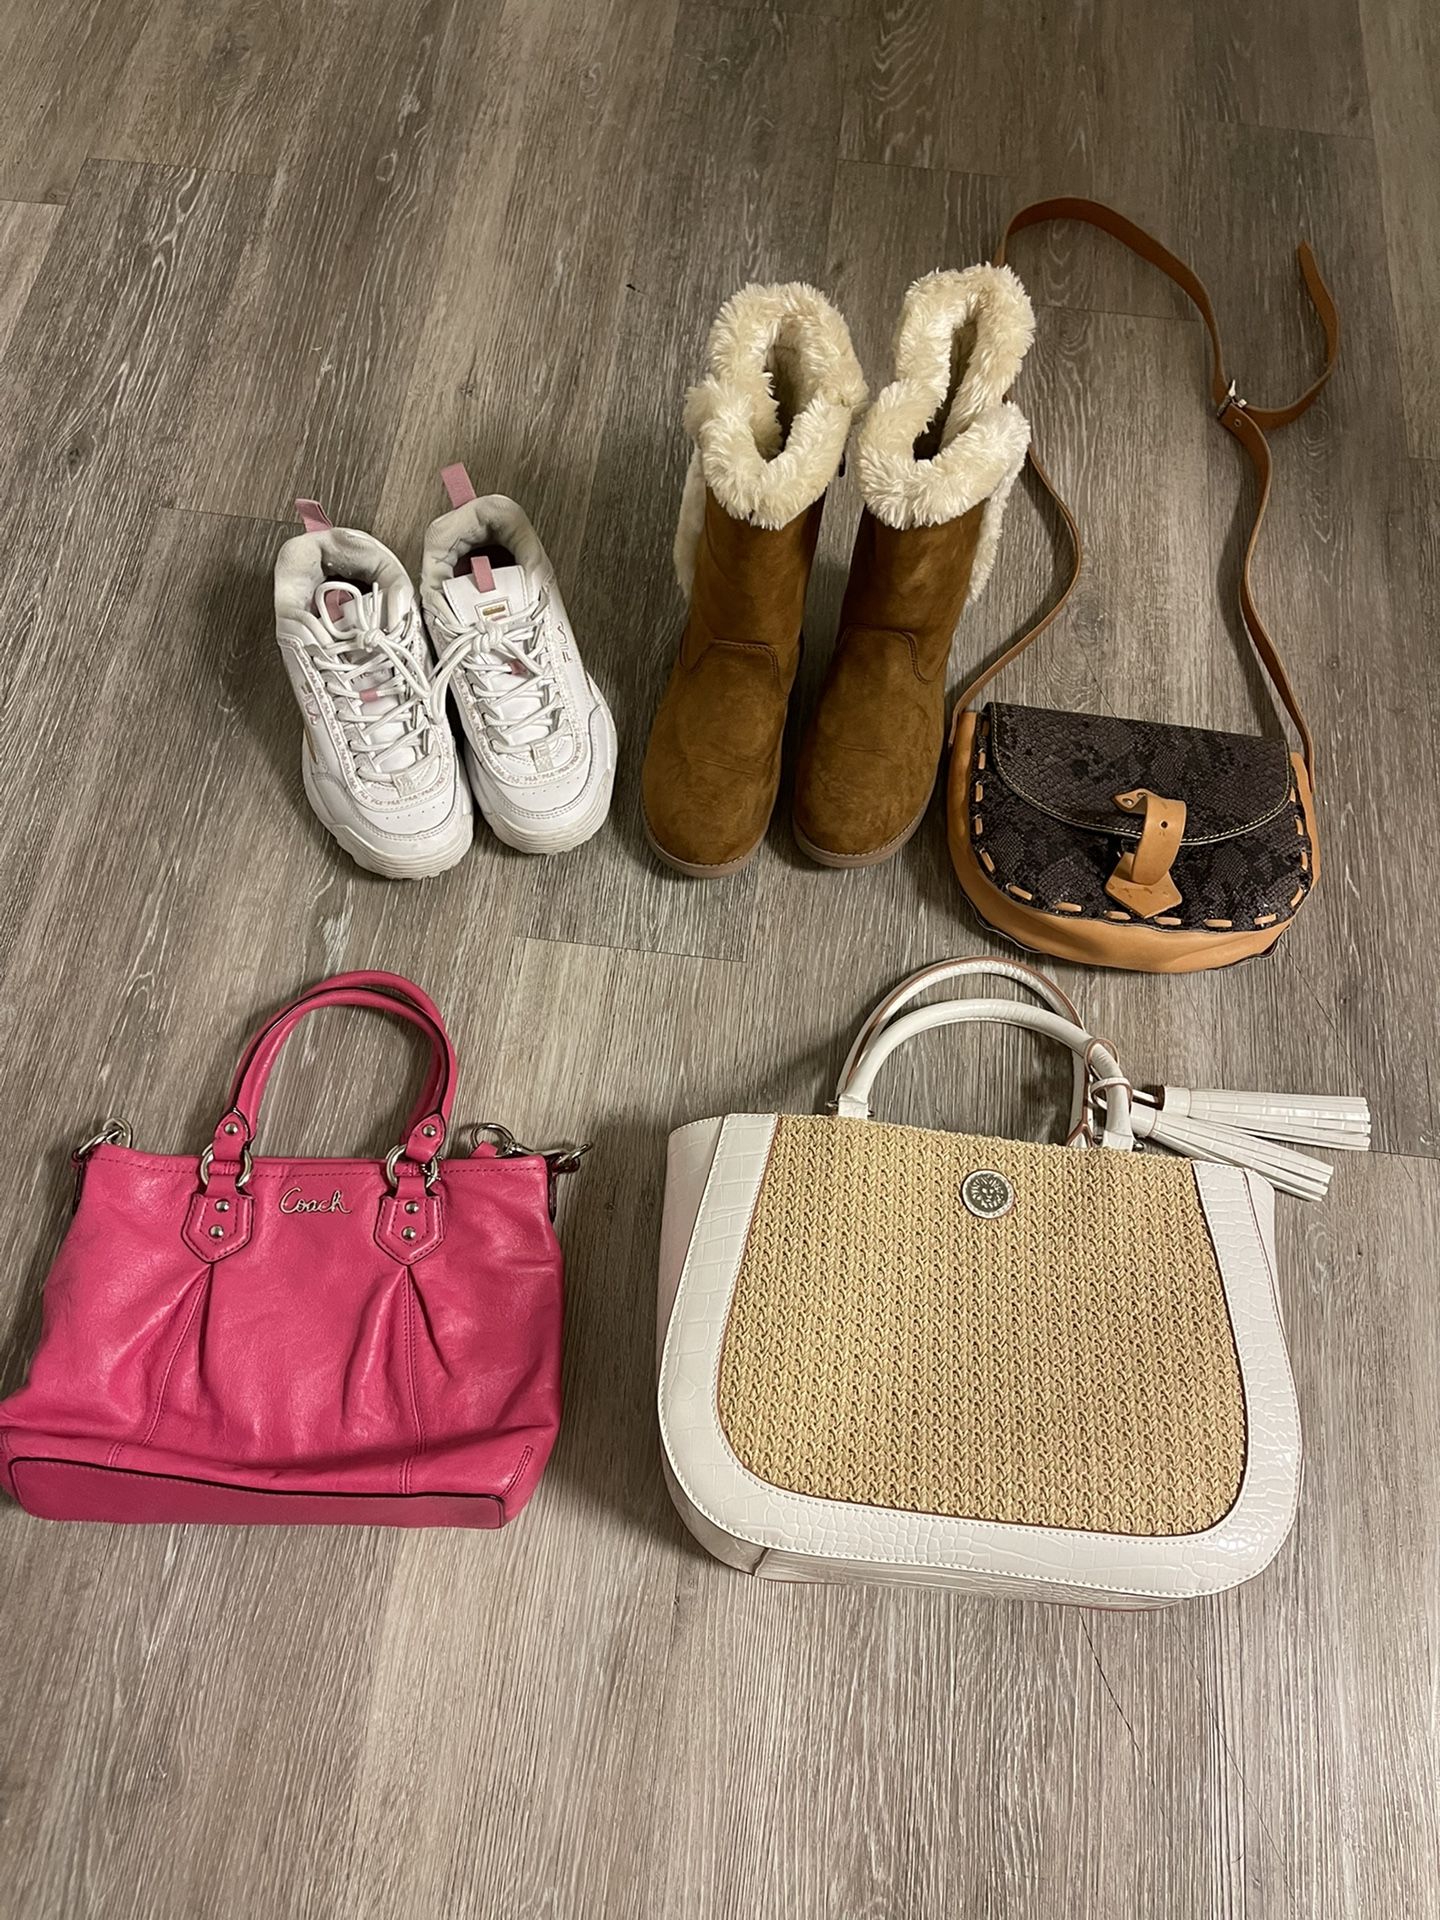 Handbags, Girls Shoes 